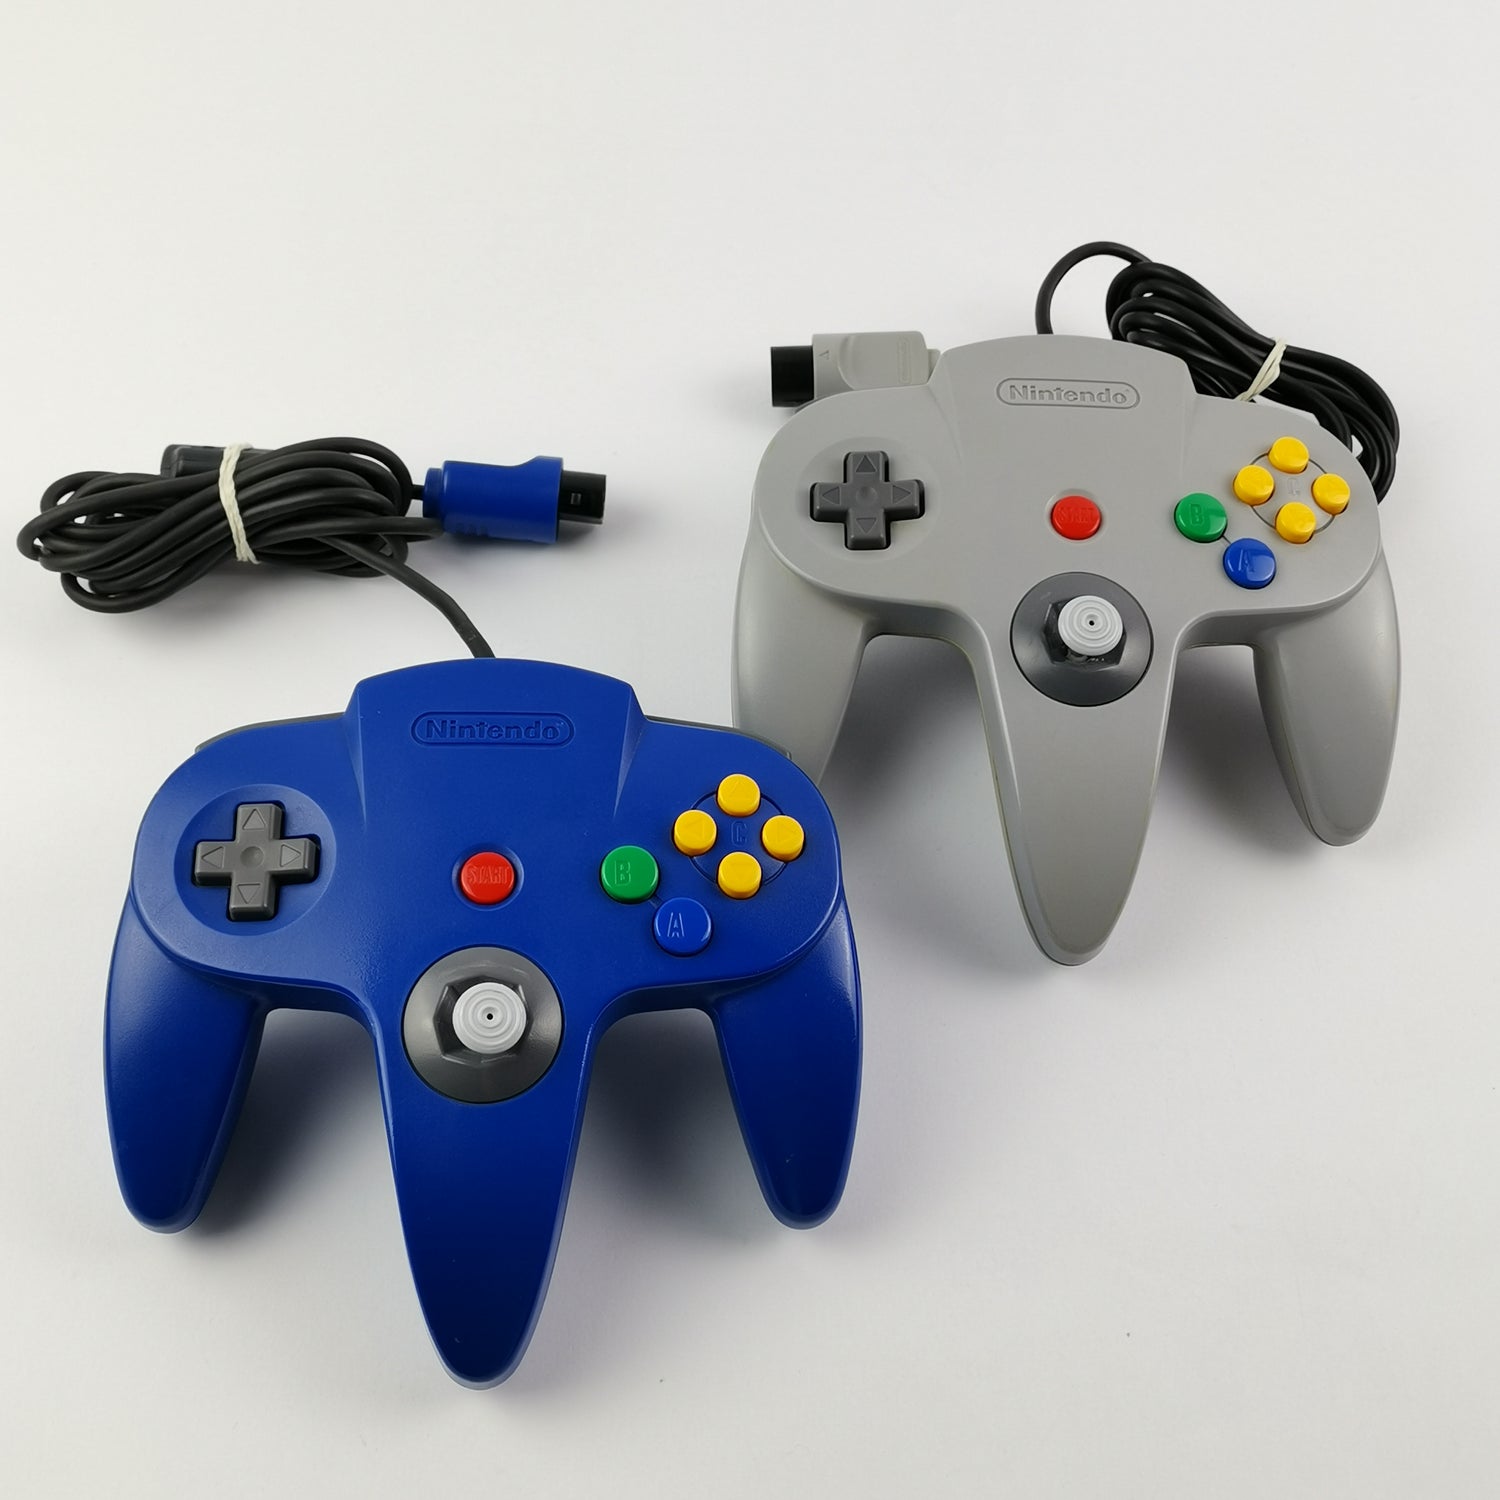 Nintendo 64 Konsole - Konvolut mit 2 Controller & Retro-Bit Expanion Pack N64